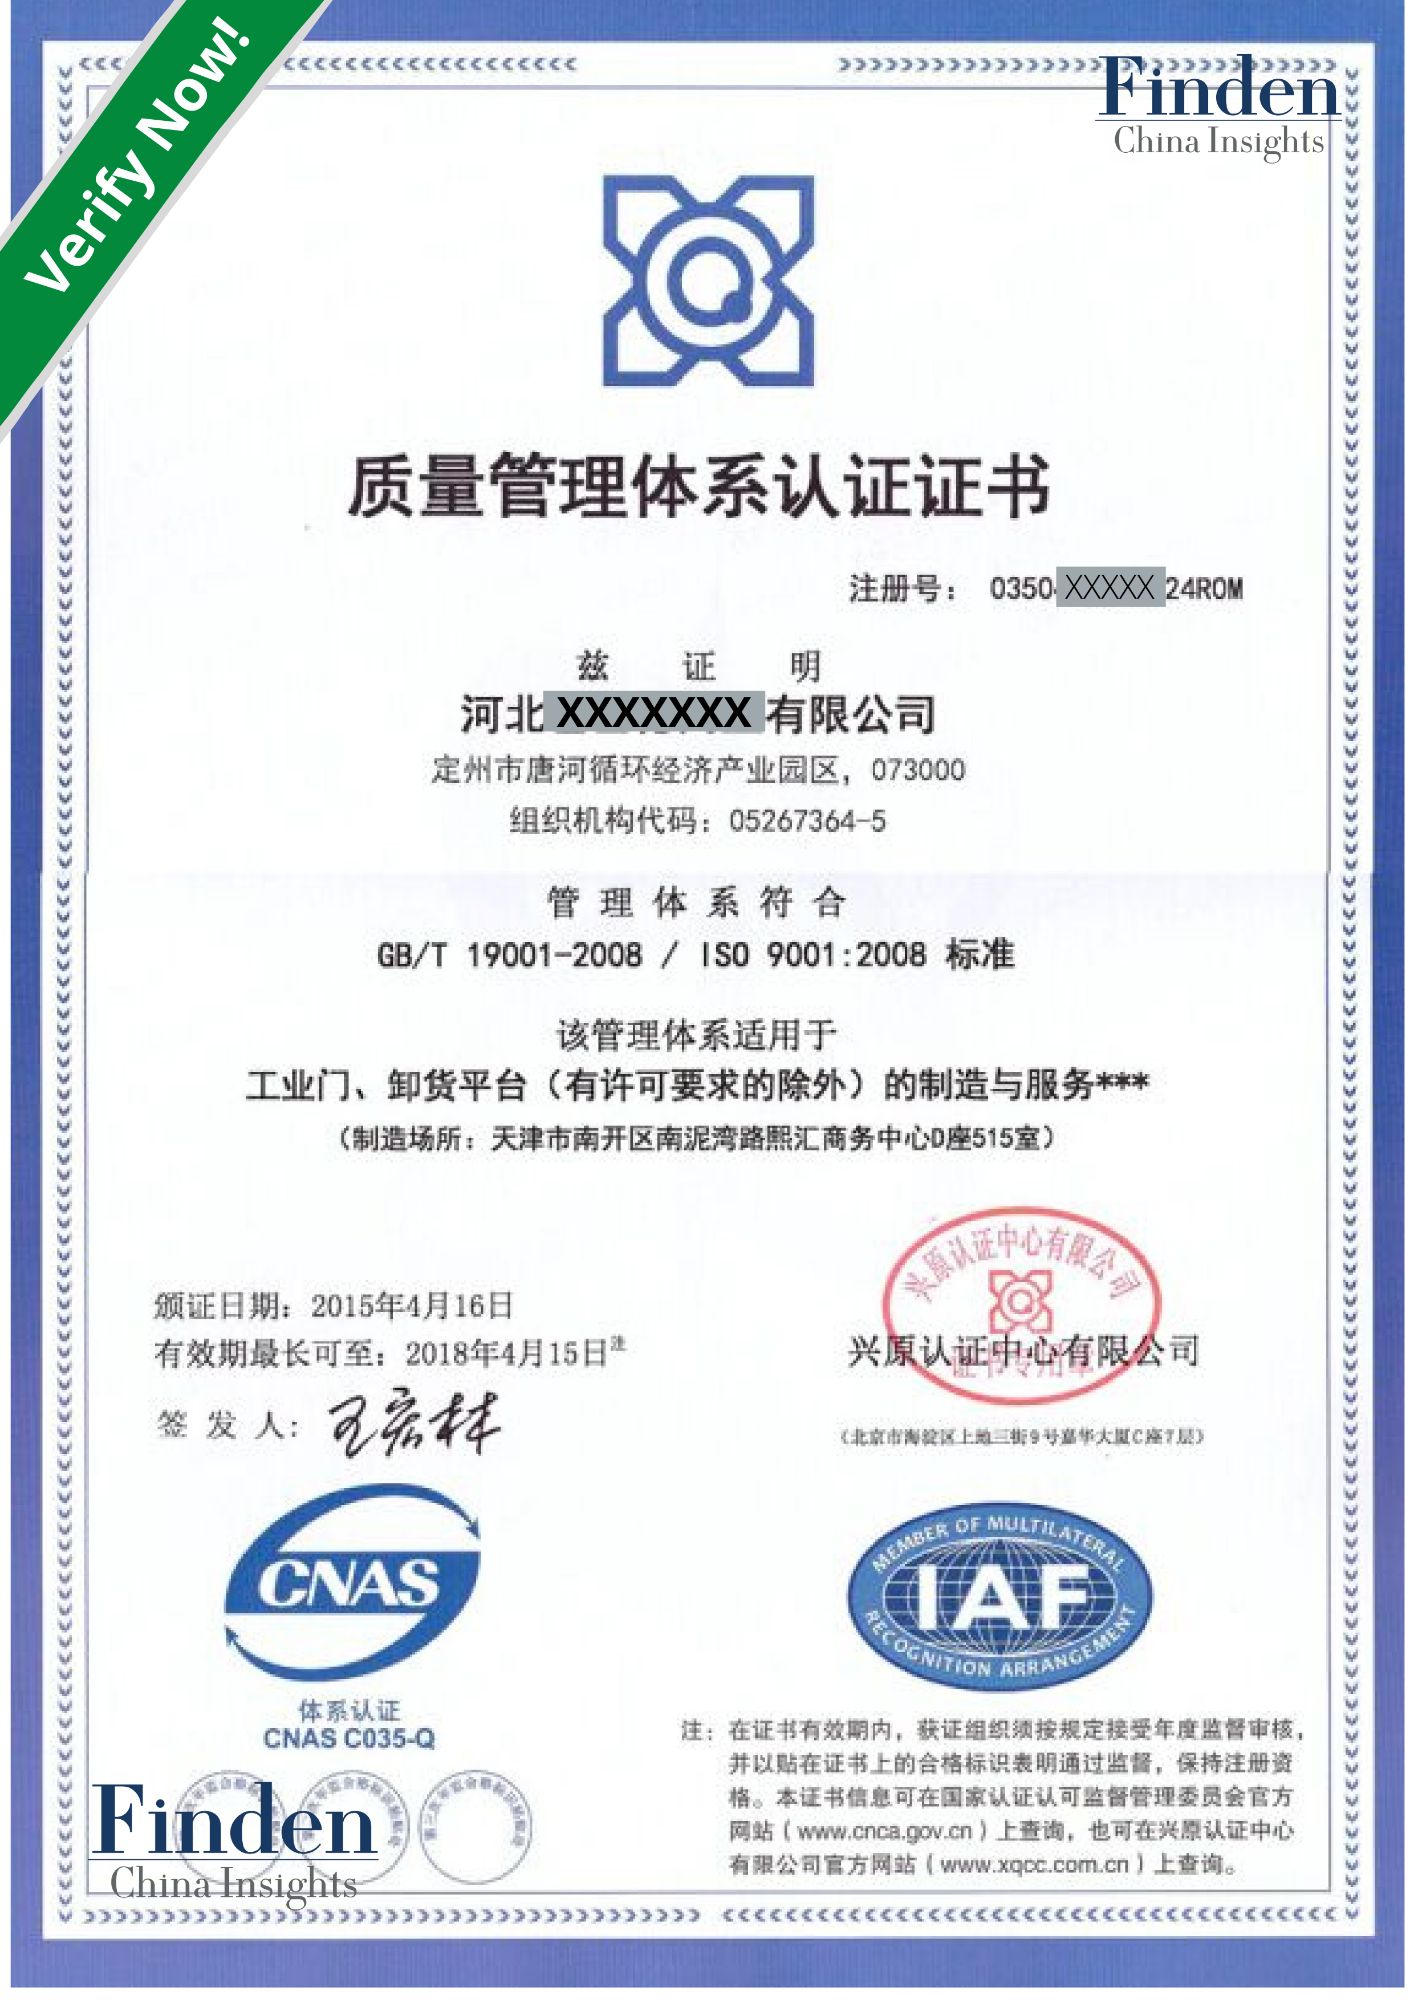 China ISO 9001 Certificate Verification